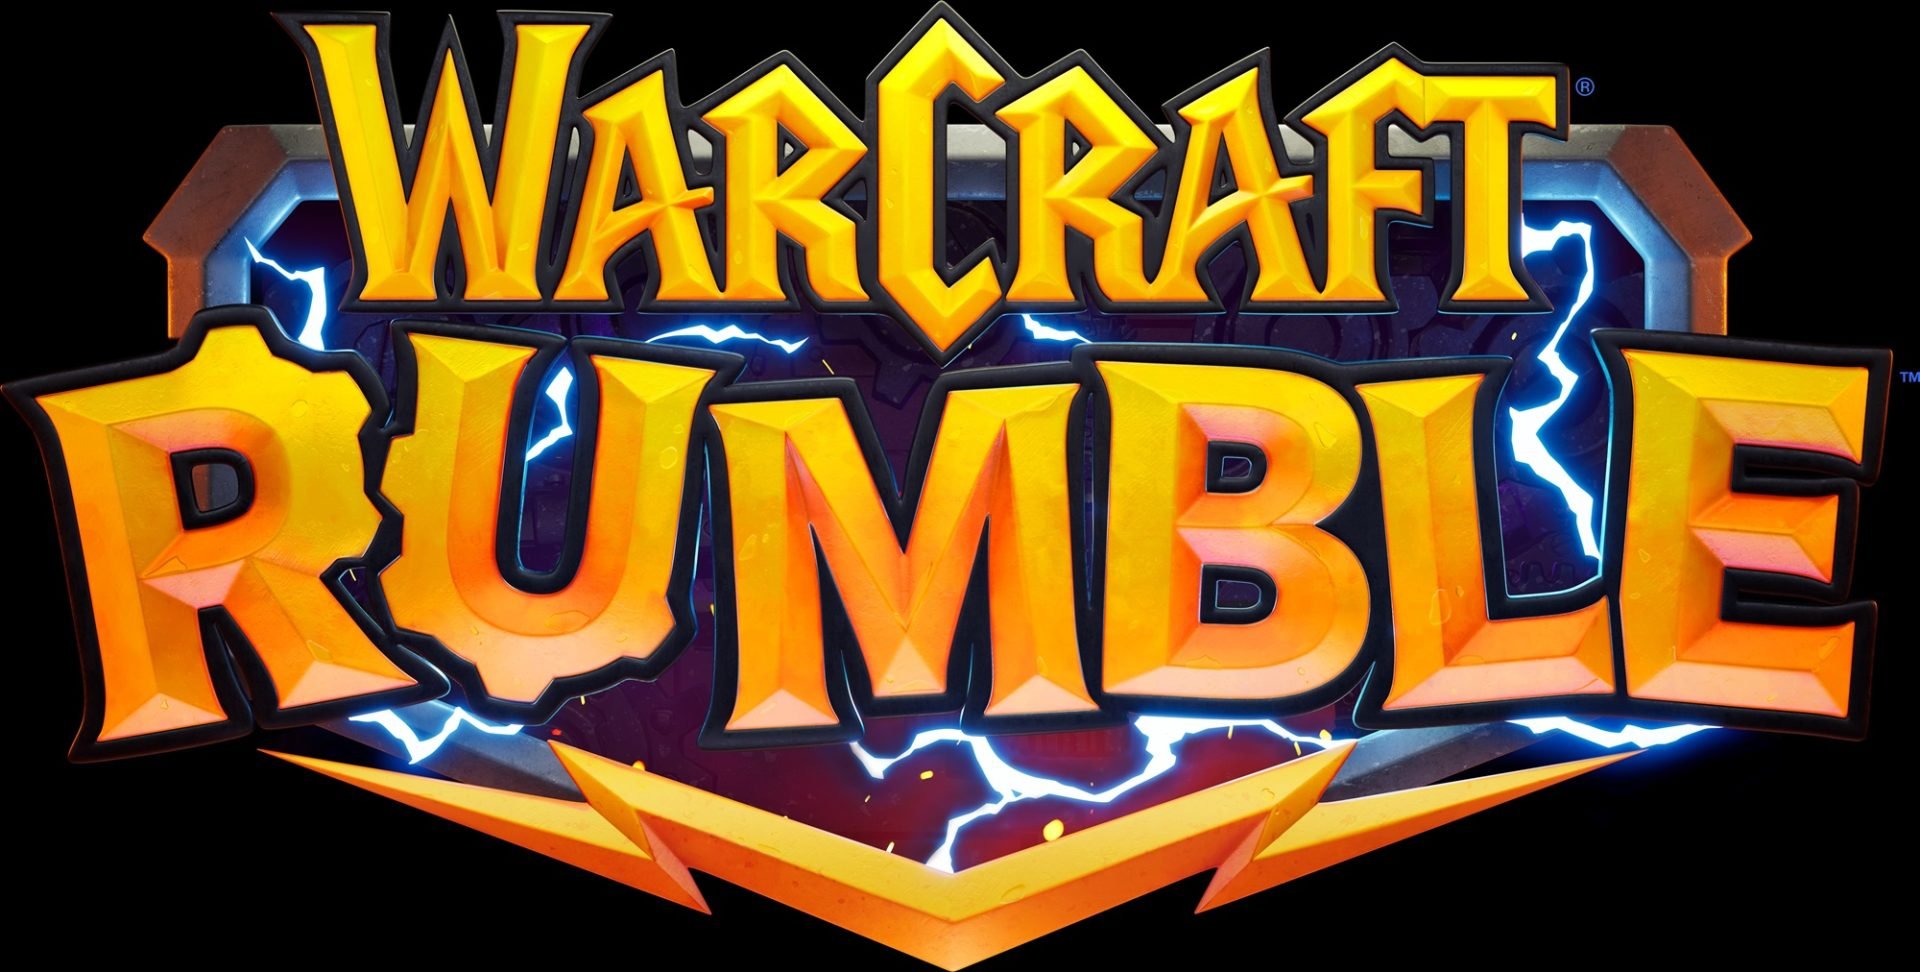 Warcraft Rumble türkçe